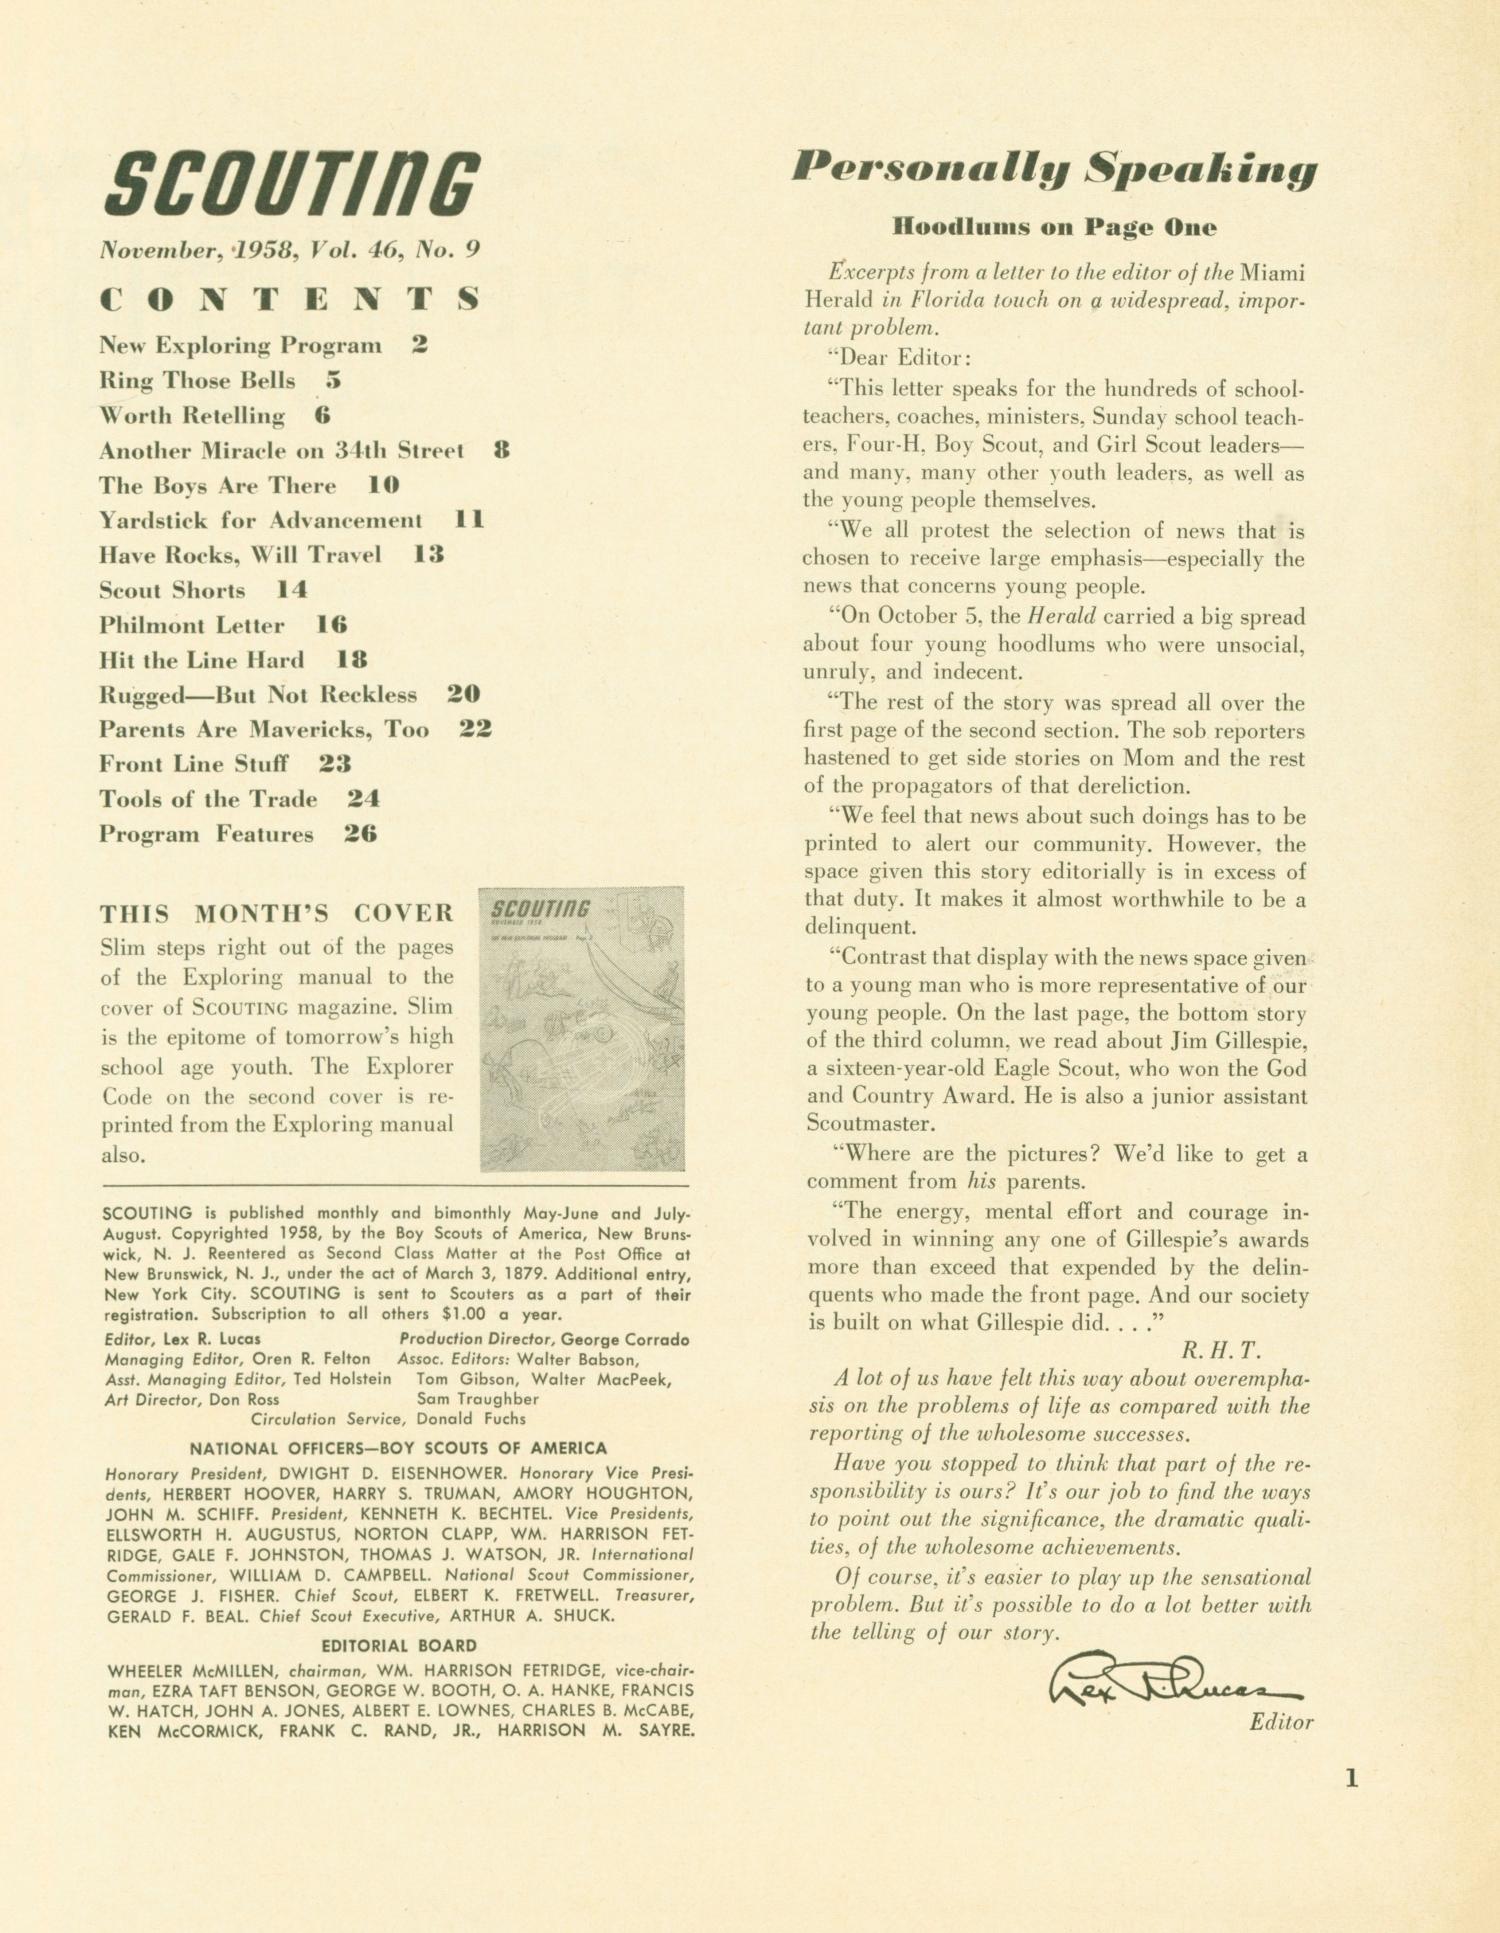 Scouting, Volume 46, Number 9, November 1958
                                                
                                                    1
                                                